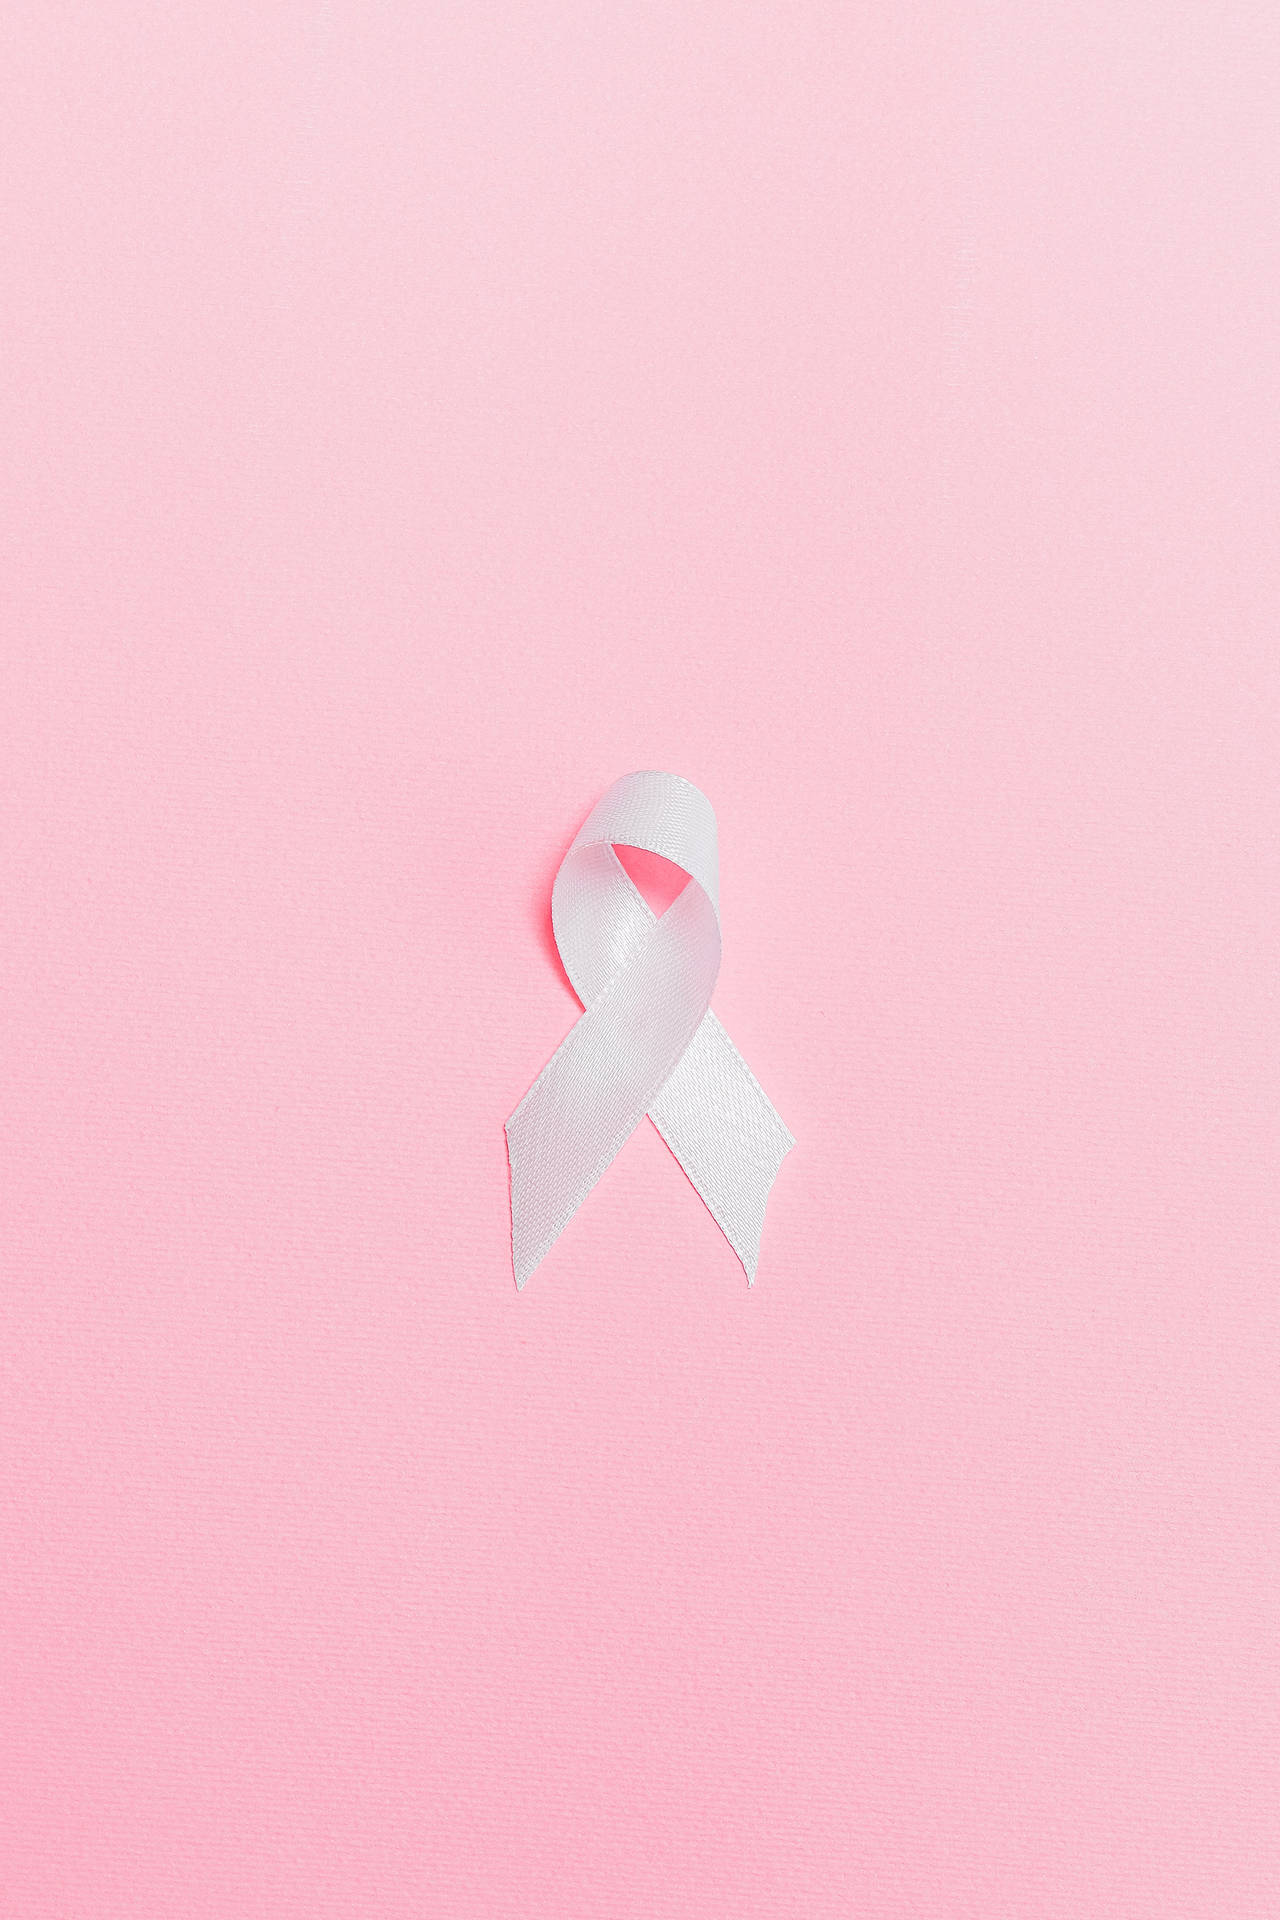 White Ribbon On Pink Background